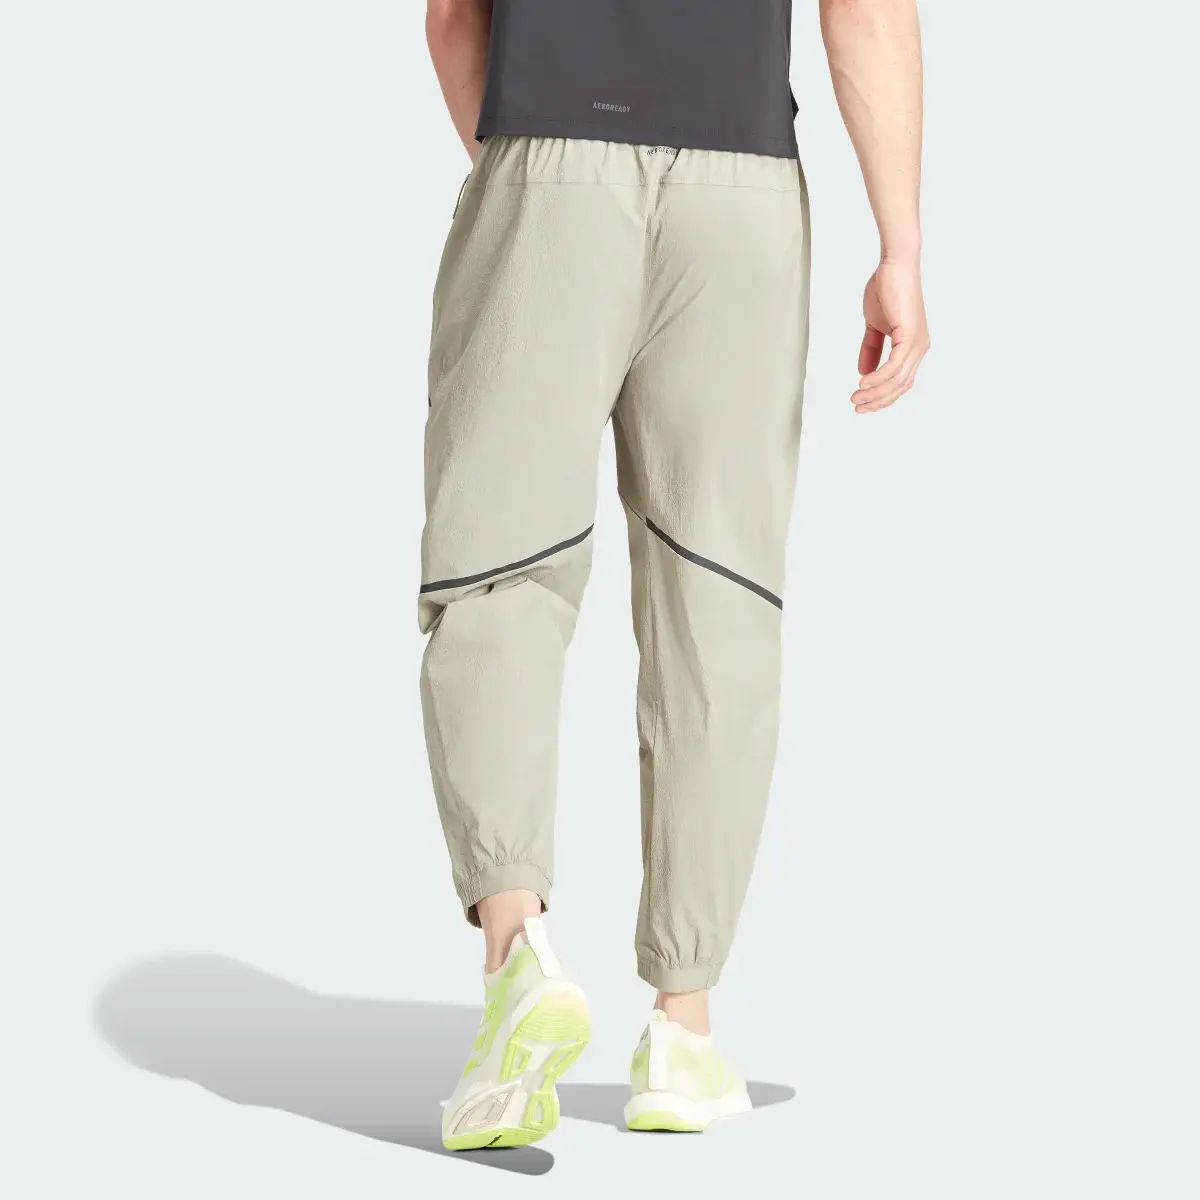 Adidas Pantaloni Designed for Training adistrong Workout. 3